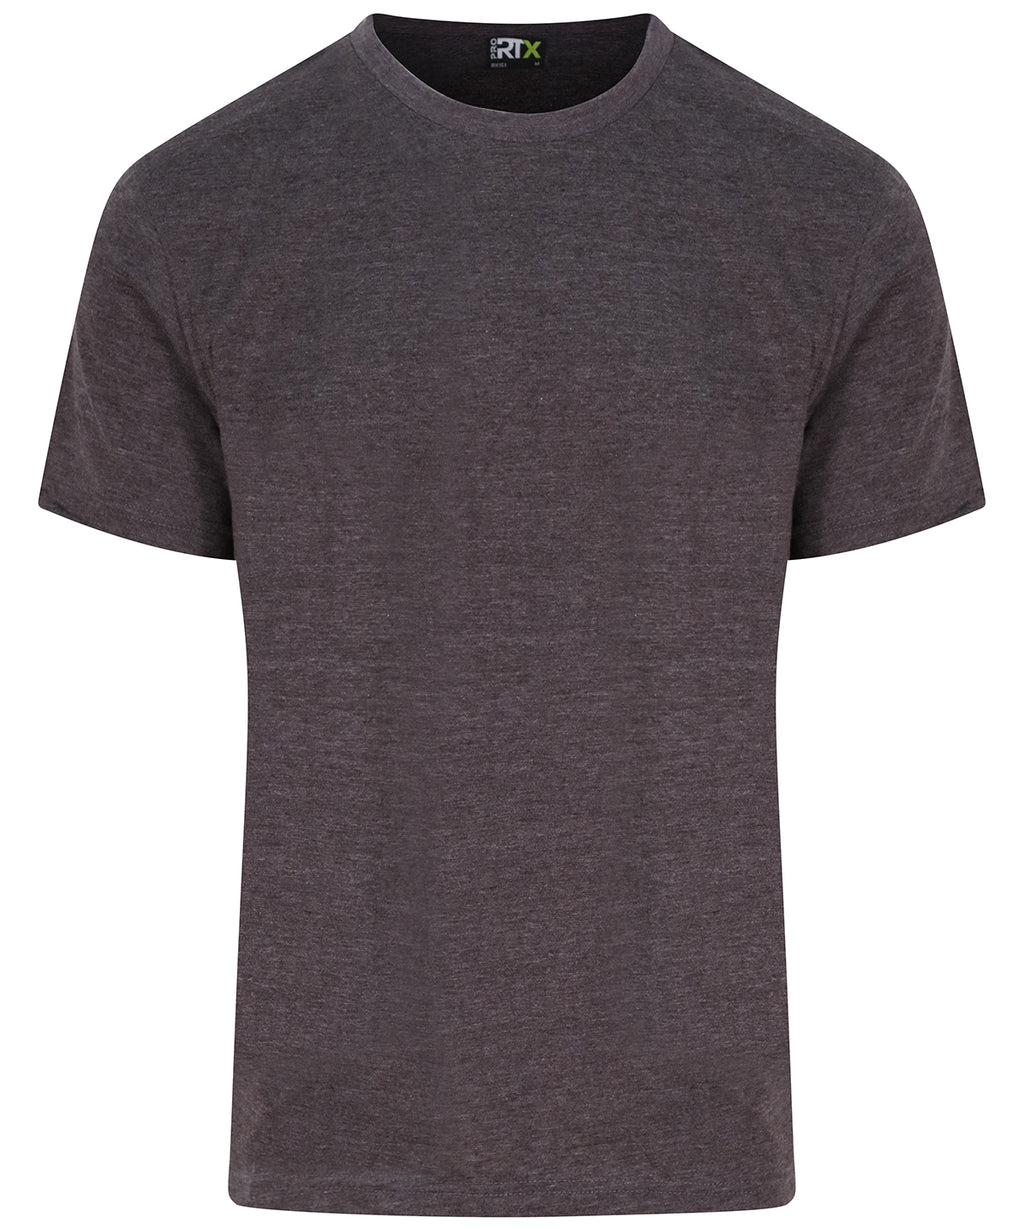 Mens Plain T-Shirt - Charcoal